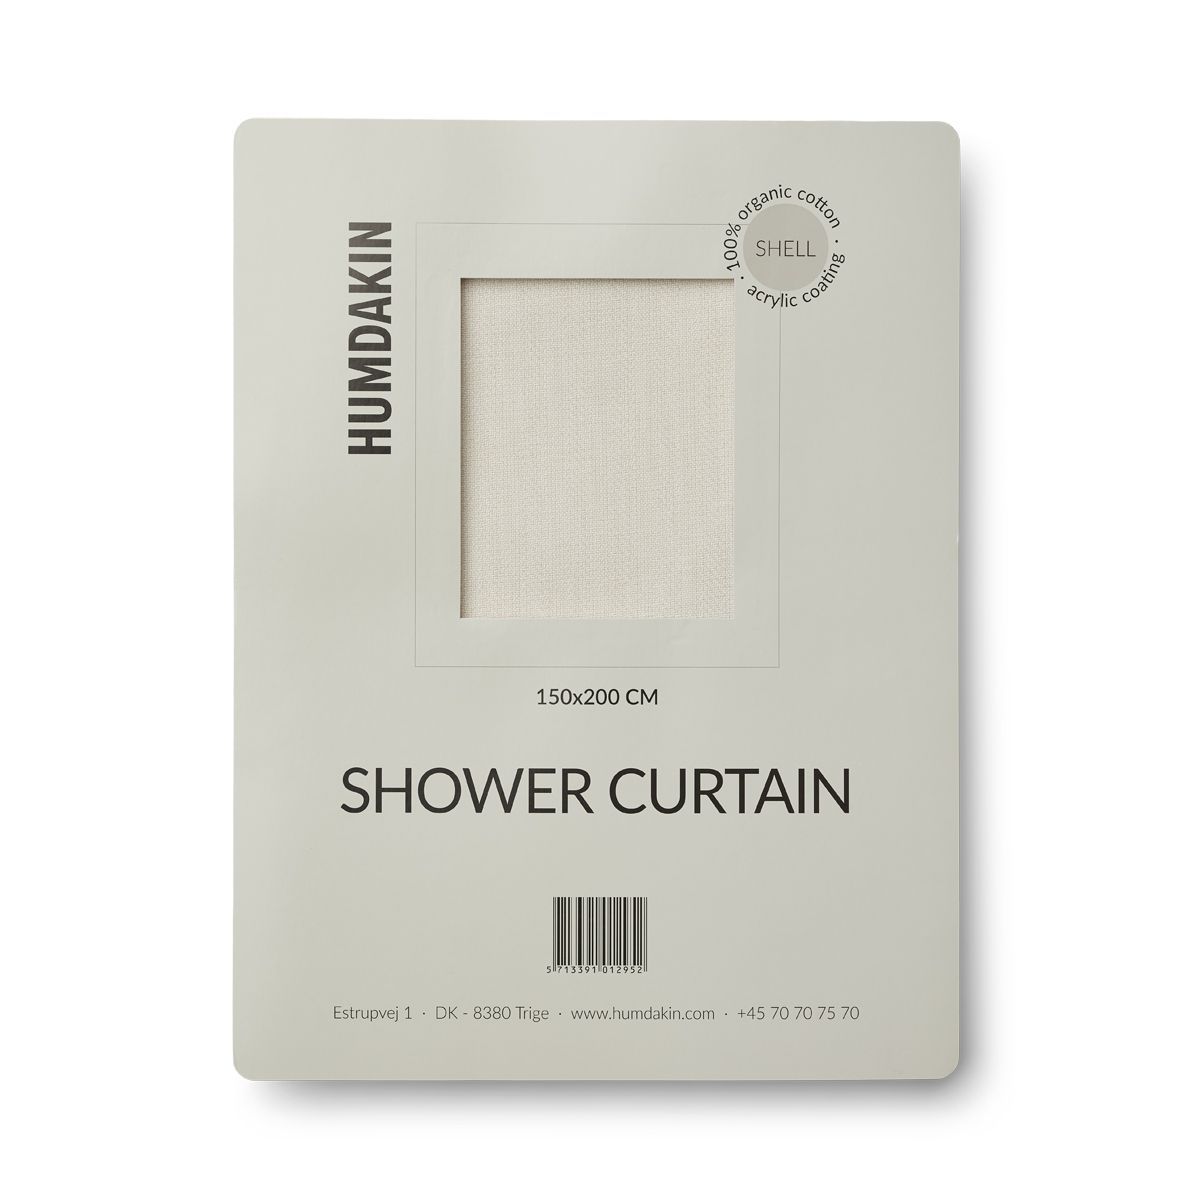 Humdakin sprchový závěs vyrobený z organické bavlny, skořápky